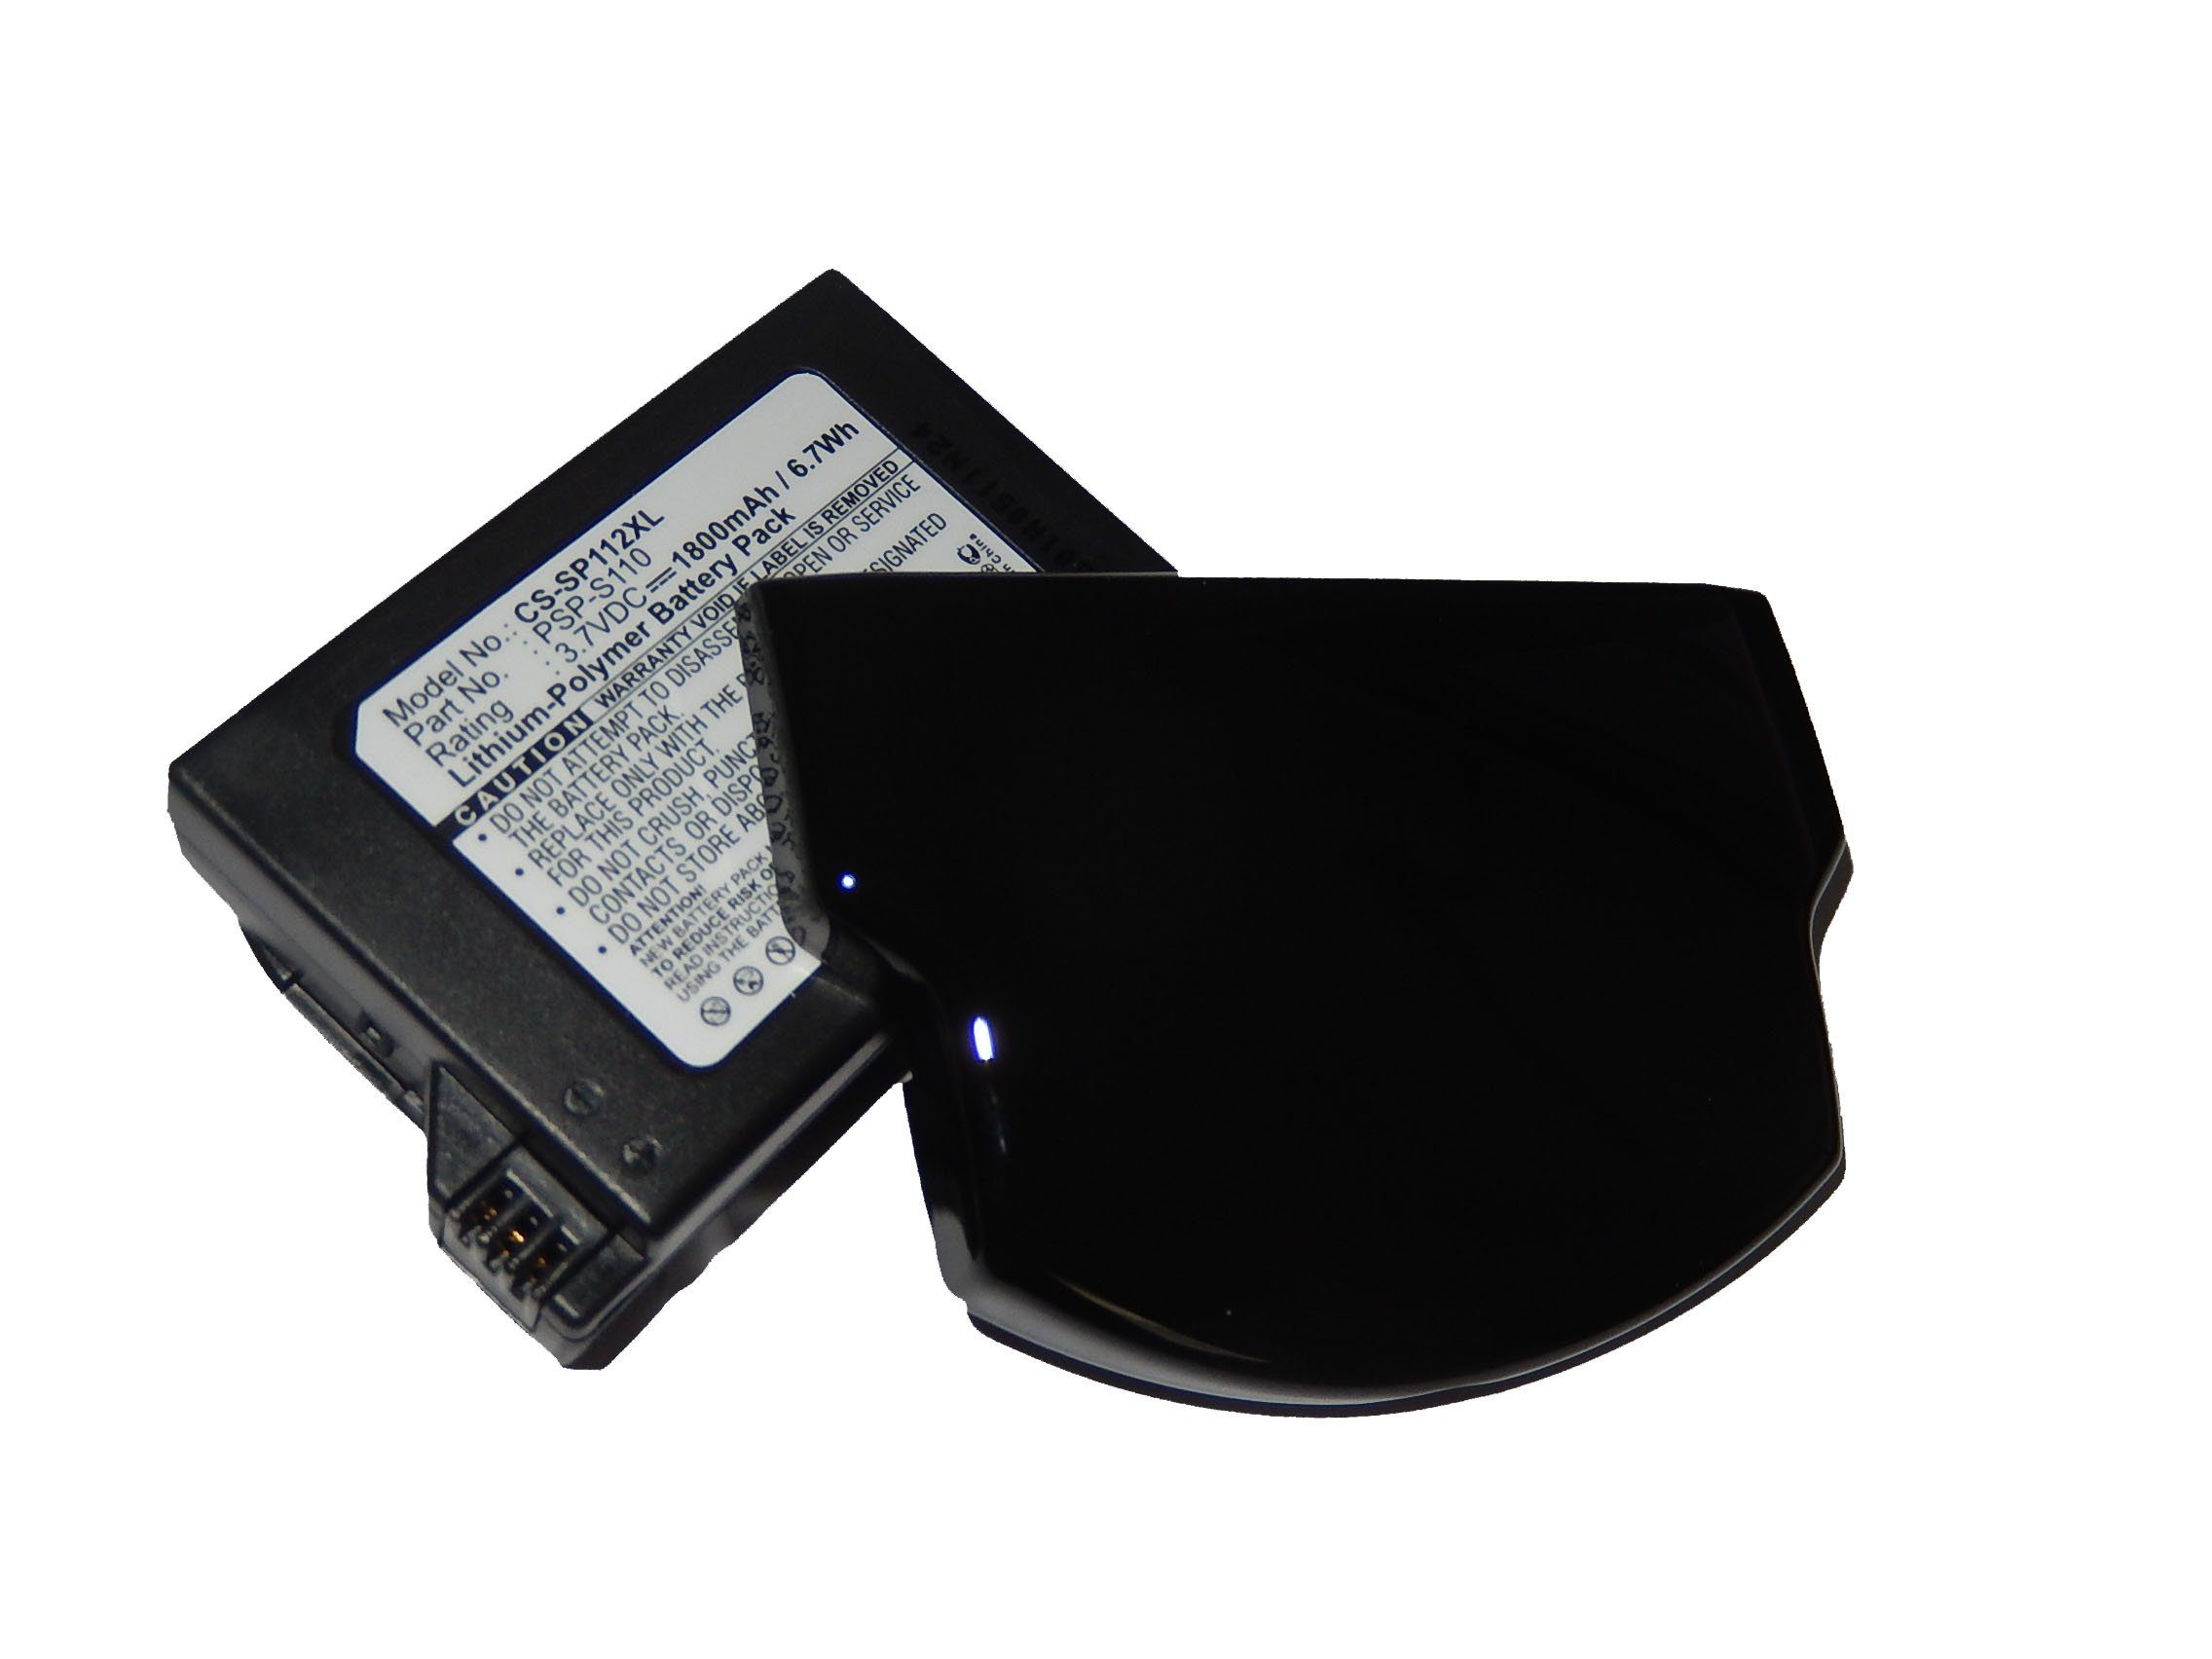 PSP-2001, PSP-2002 Portable Slim Lite für Sony PSP-2000, Akku Li-Polymer) 3,7V, vhbw (1800mAh, mAh & Spielekonsole 1800 passend Gener, Playstation 2.